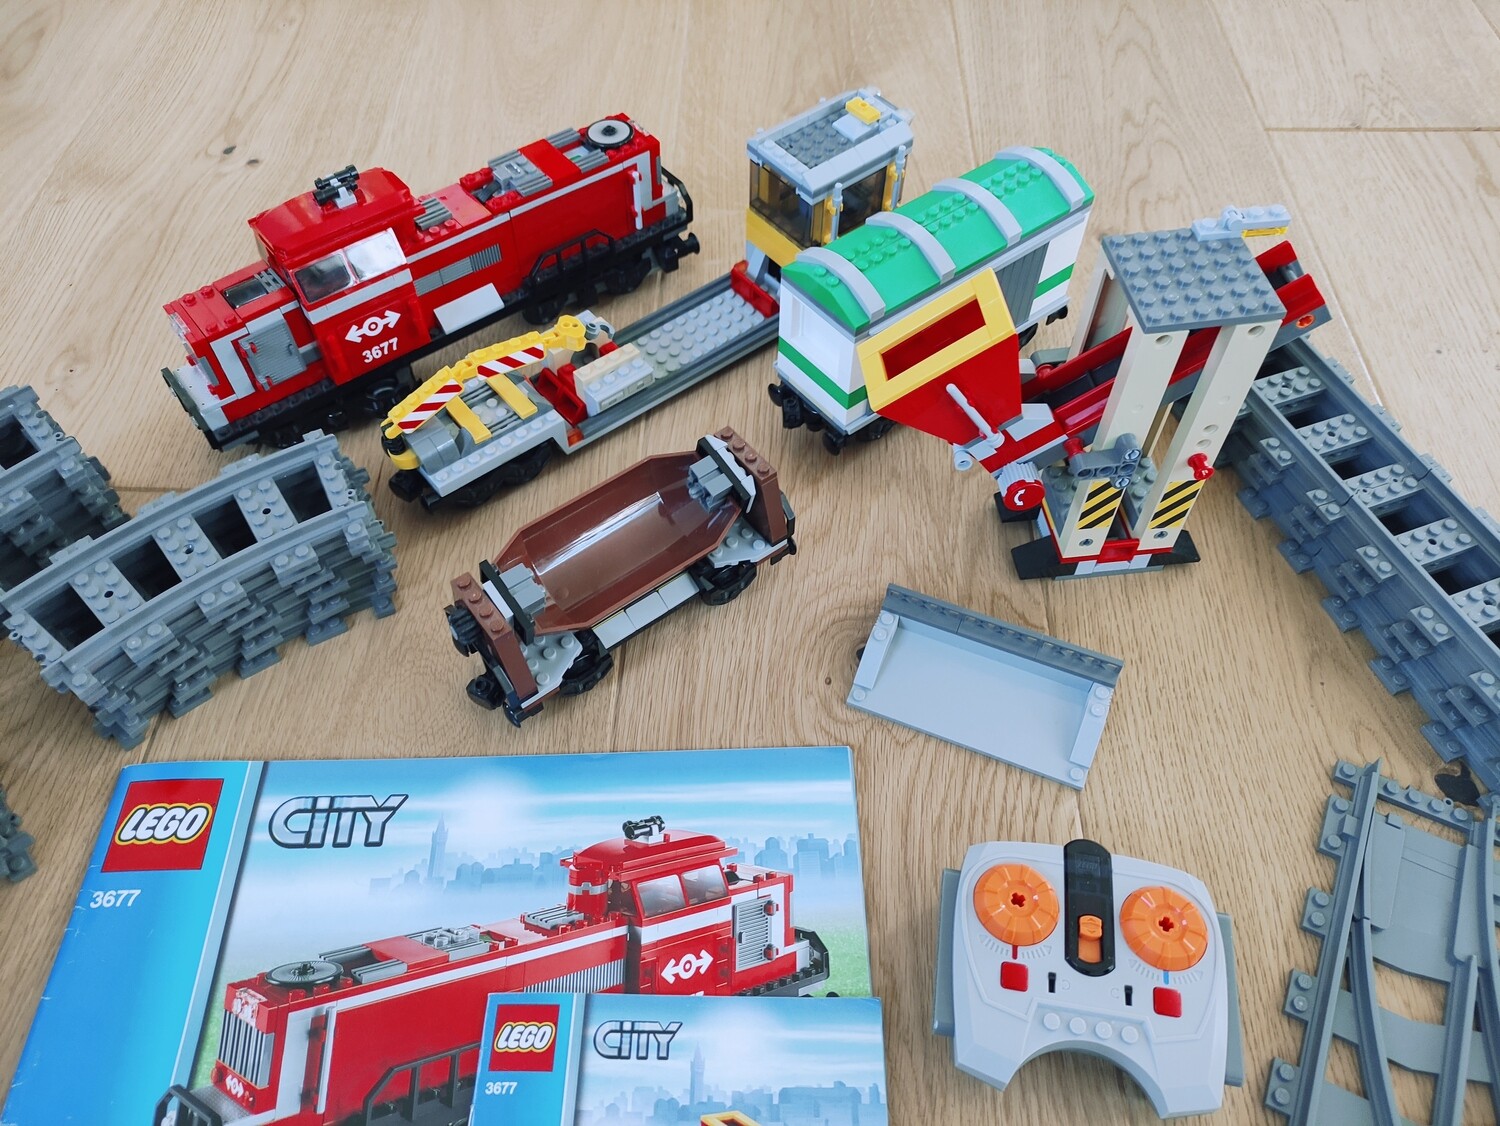 Lego City 3677 Red Cargo Train